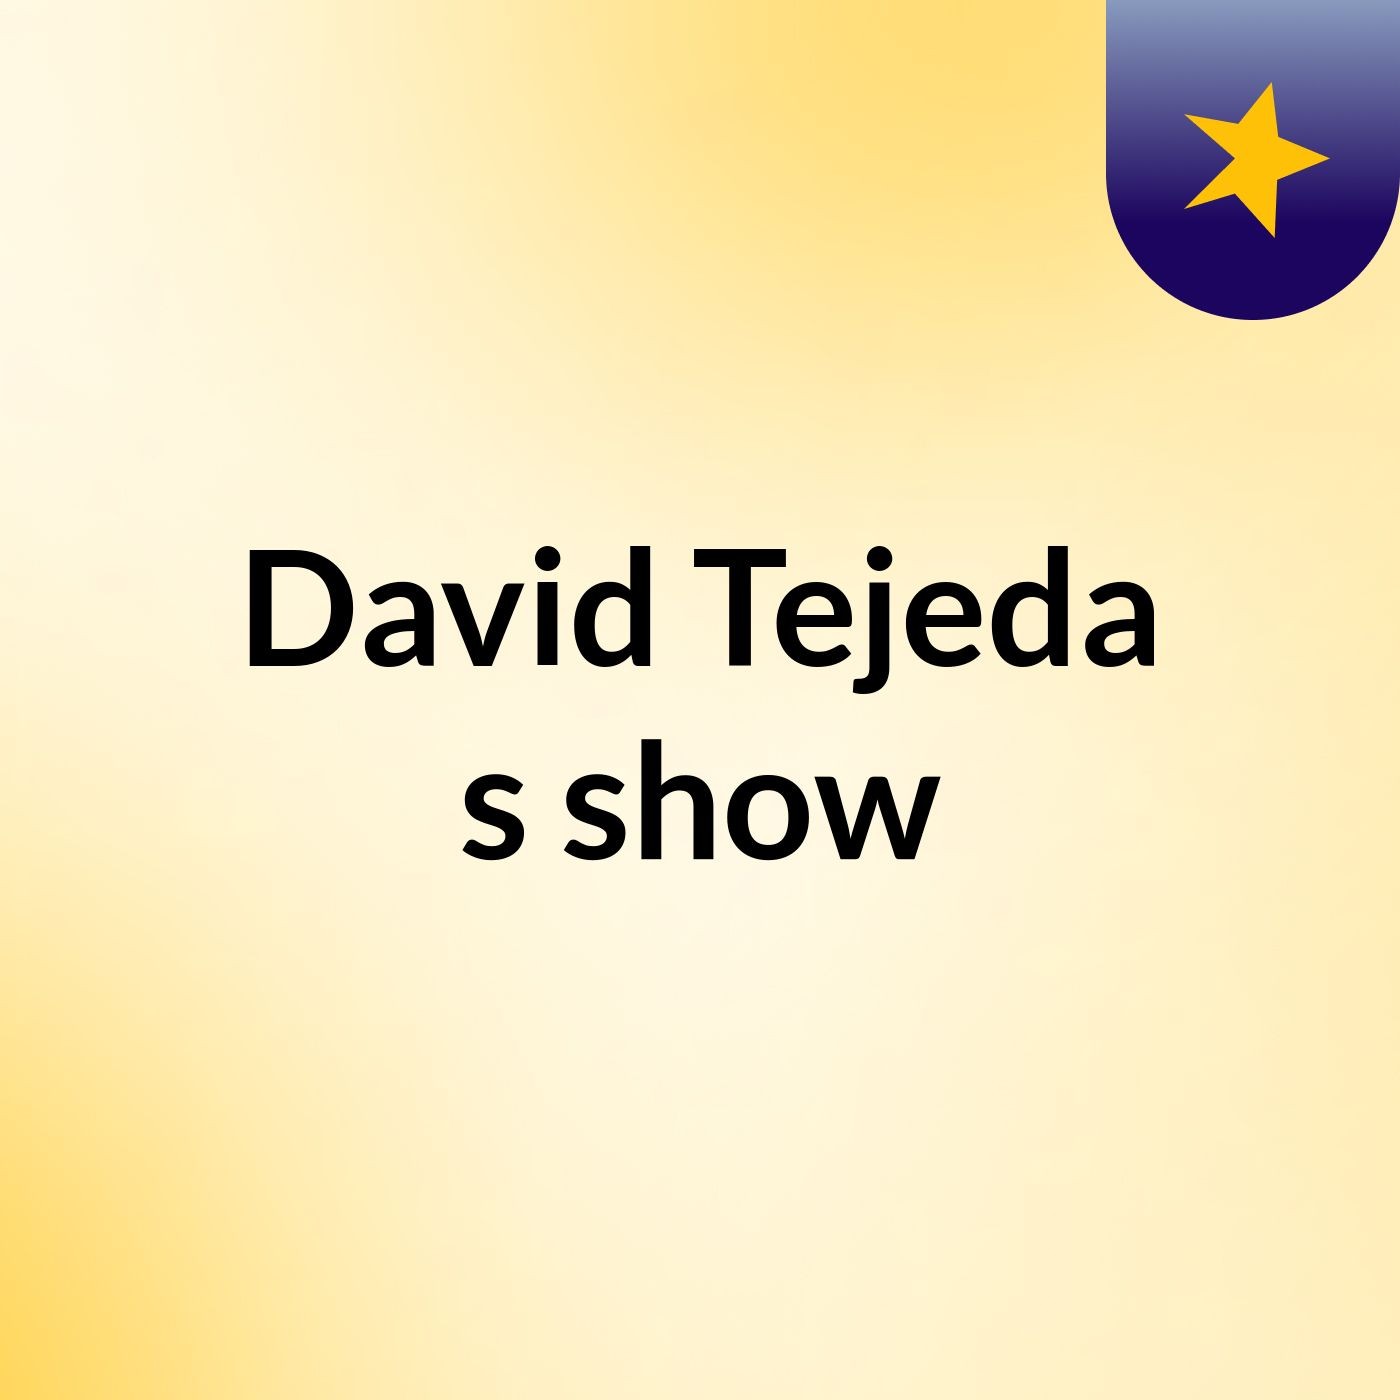 David Tejeda's show